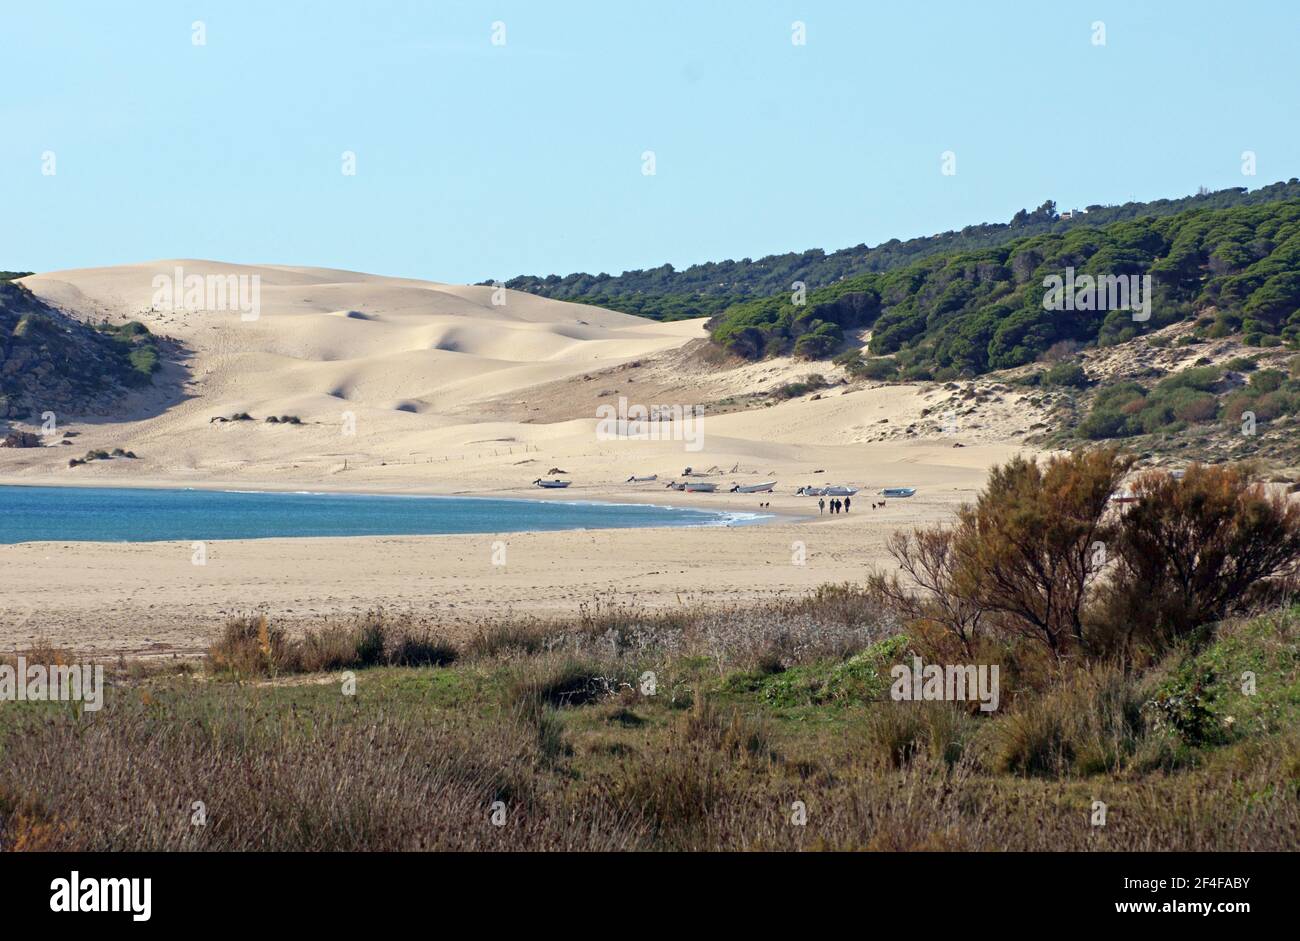 Spain: The sand dunes at Bolonia (Dunas de Bolonia) Stock Photo